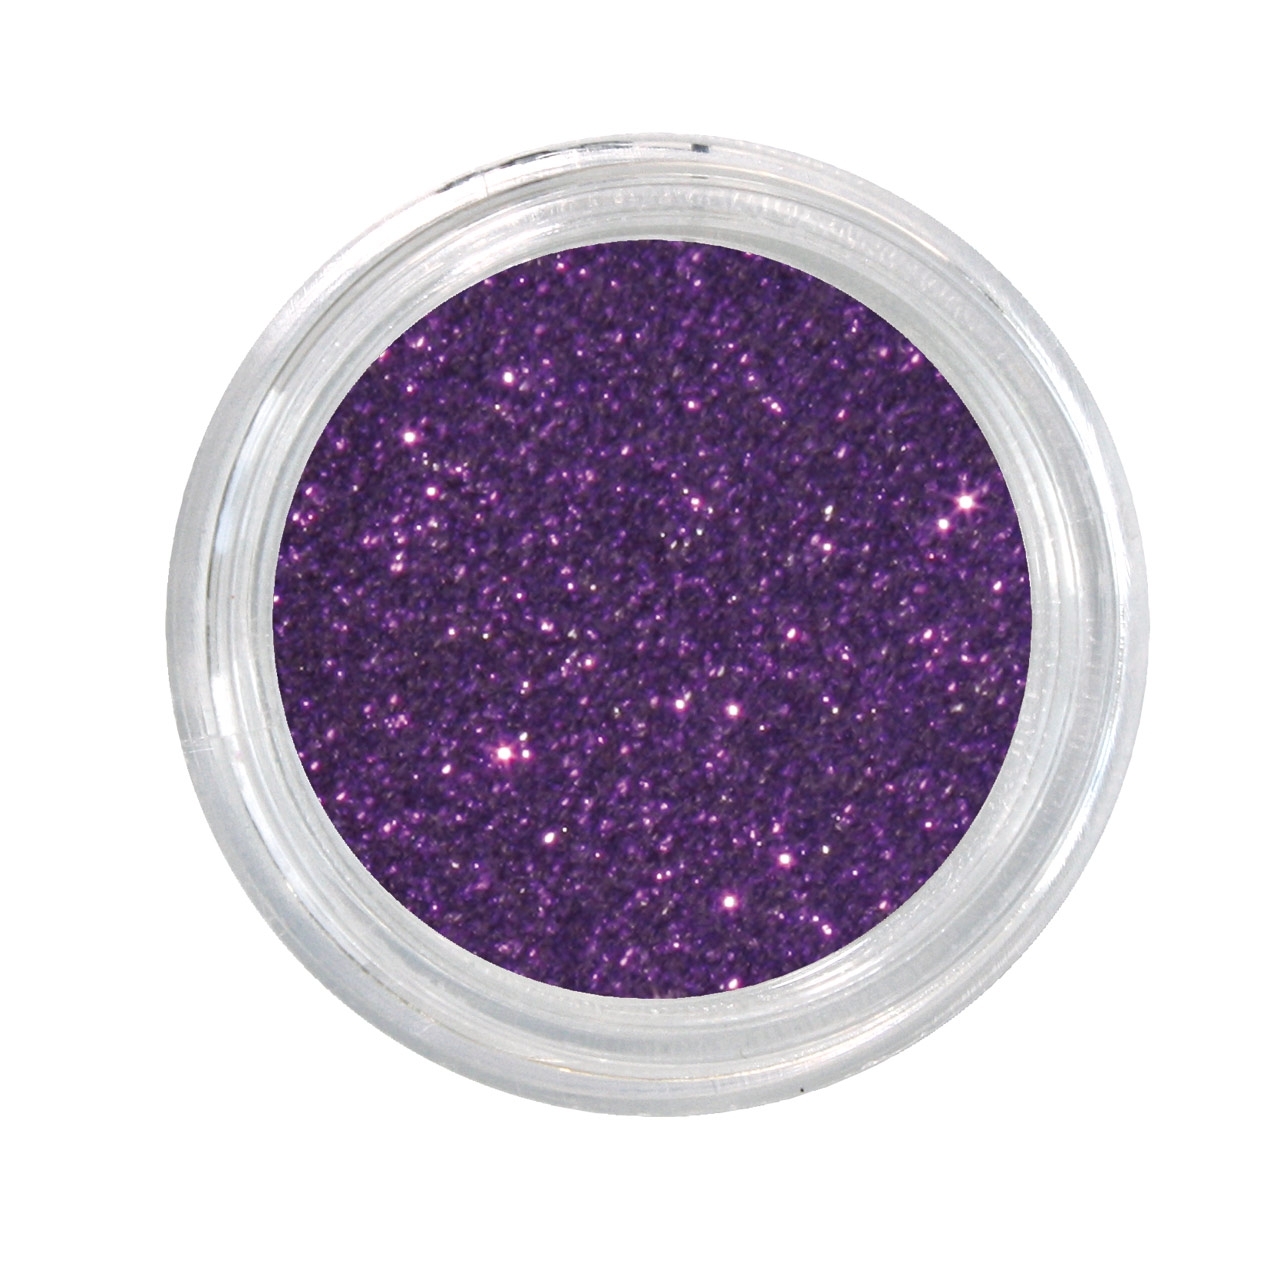 BAEHR BEAUTY CONCEPT NAILS Nail Art Glitterpulver violet